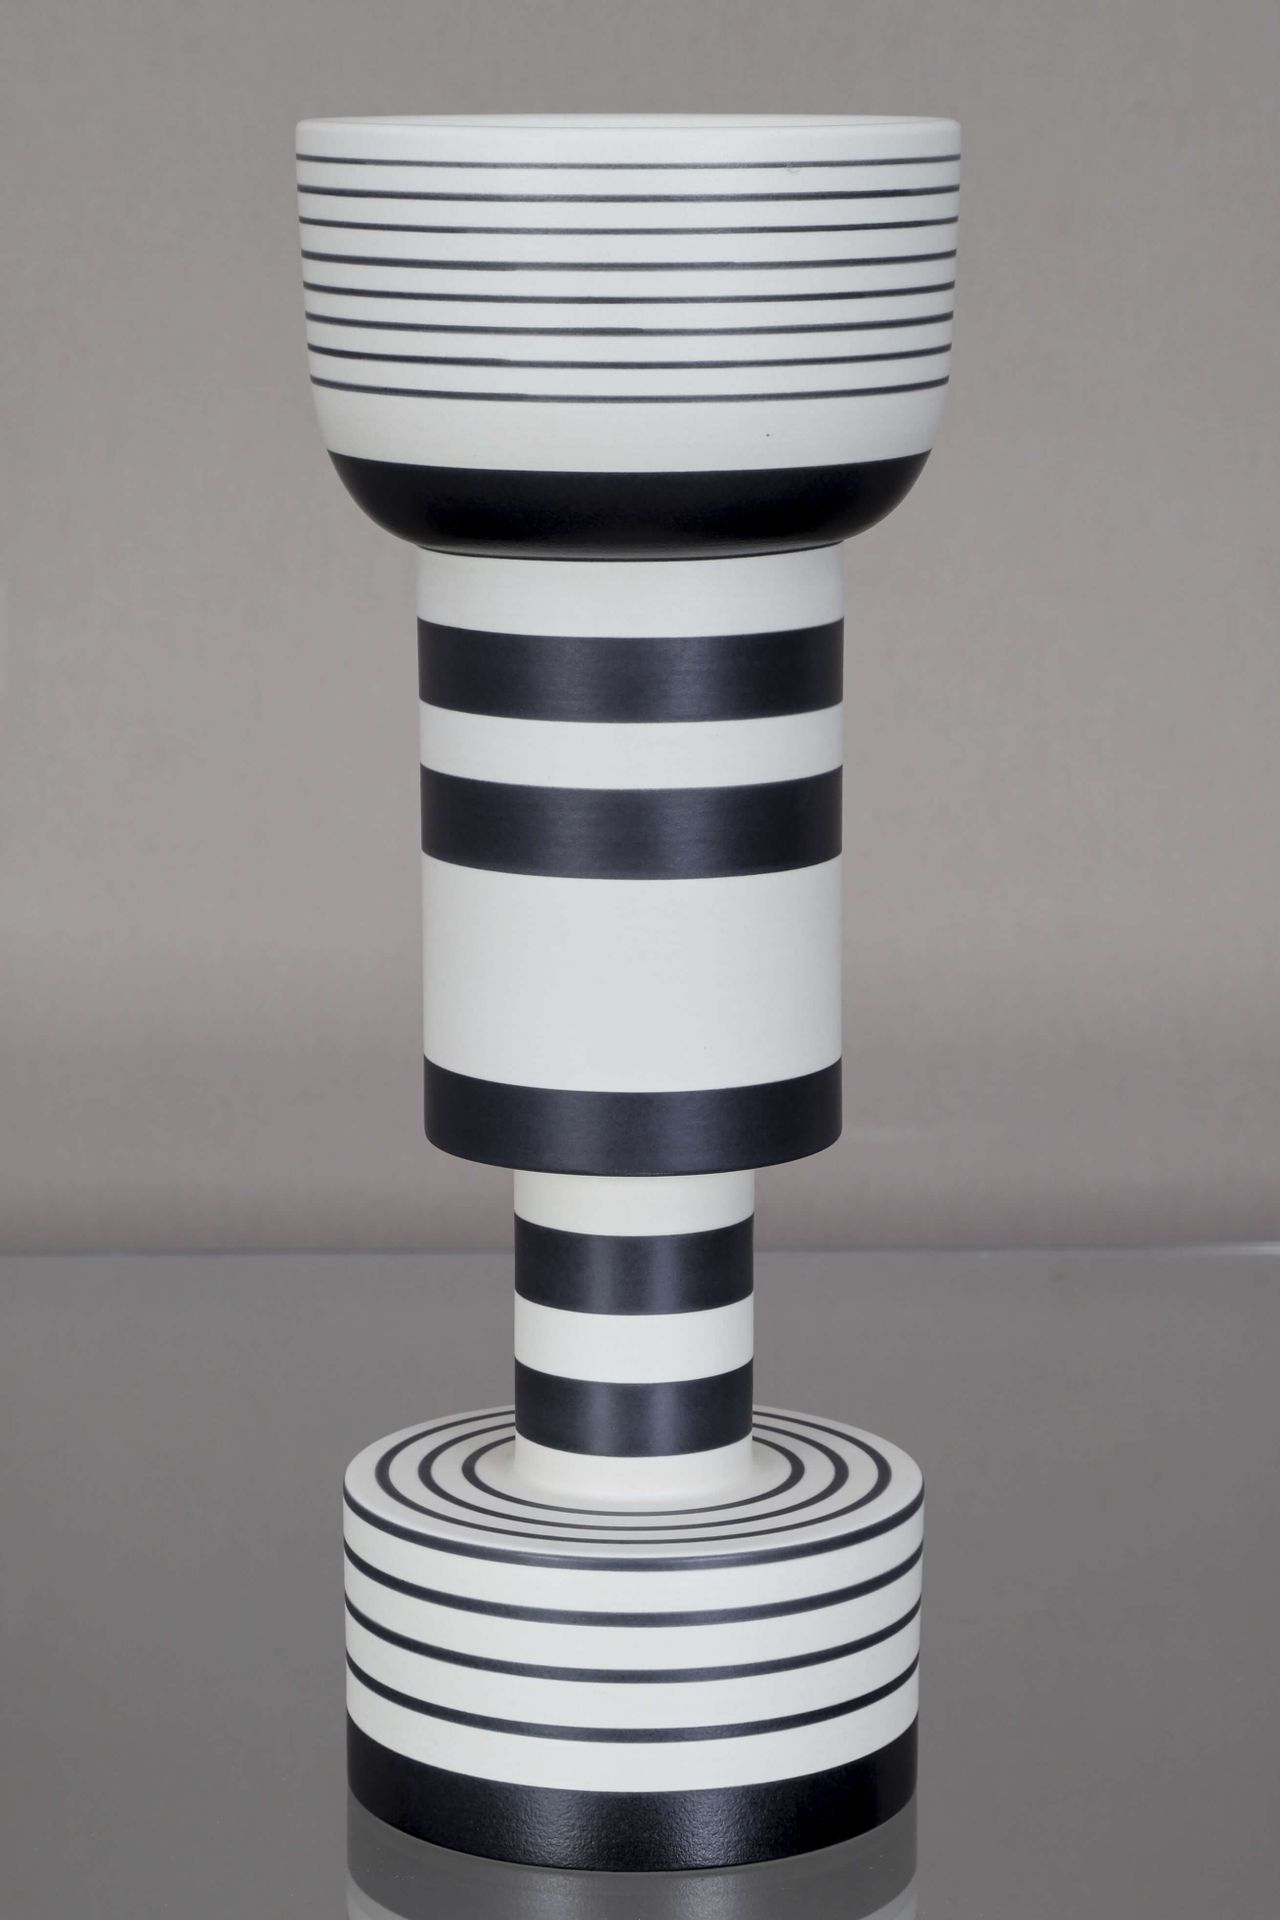 Ettore Sottsass (1917-2007) 大约1980年的圣杯花瓶 黑白相间的陶瓷装饰，底座下有签名，出版商标记为蒙特卢波的Bitossi。
带着&hellip;